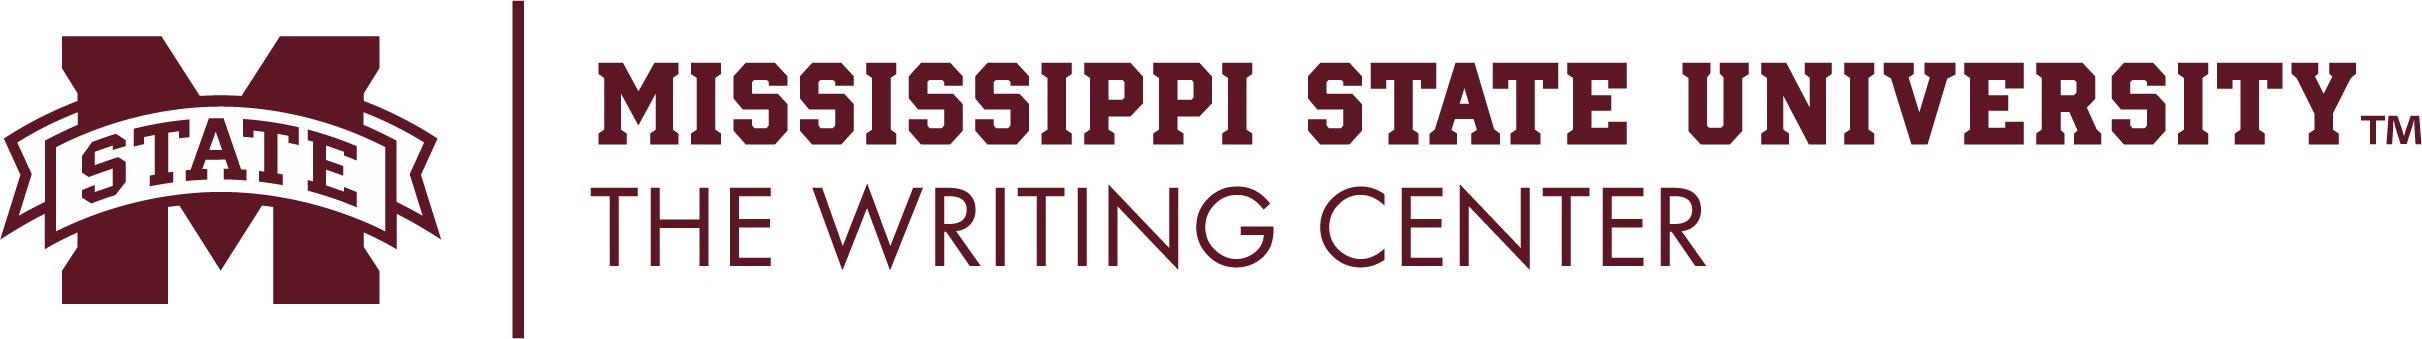 Mississippi State University Writing Center Logo